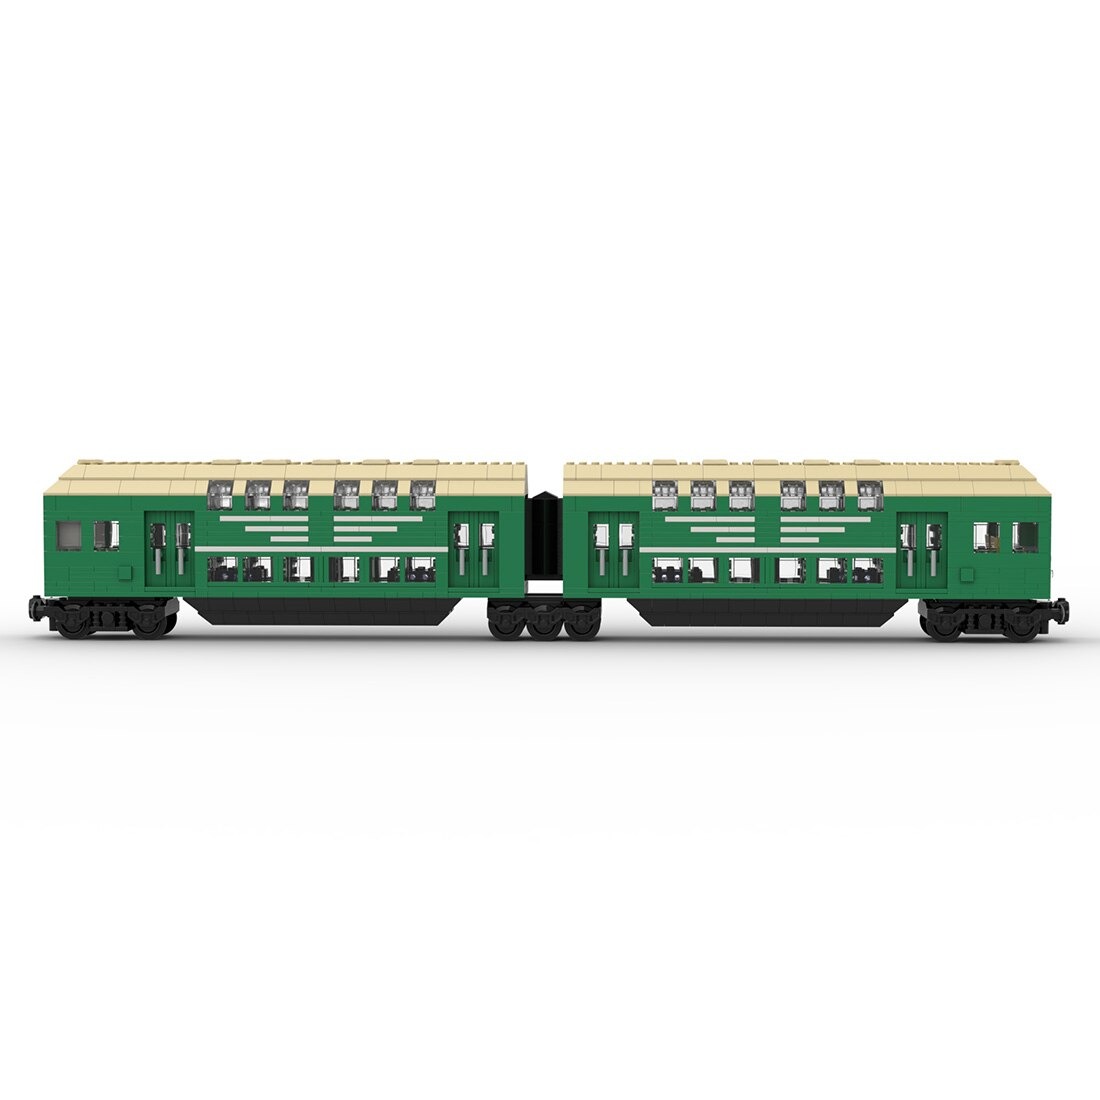 authorized moc 109281 7 axle train carri main 1 - KAZI Block